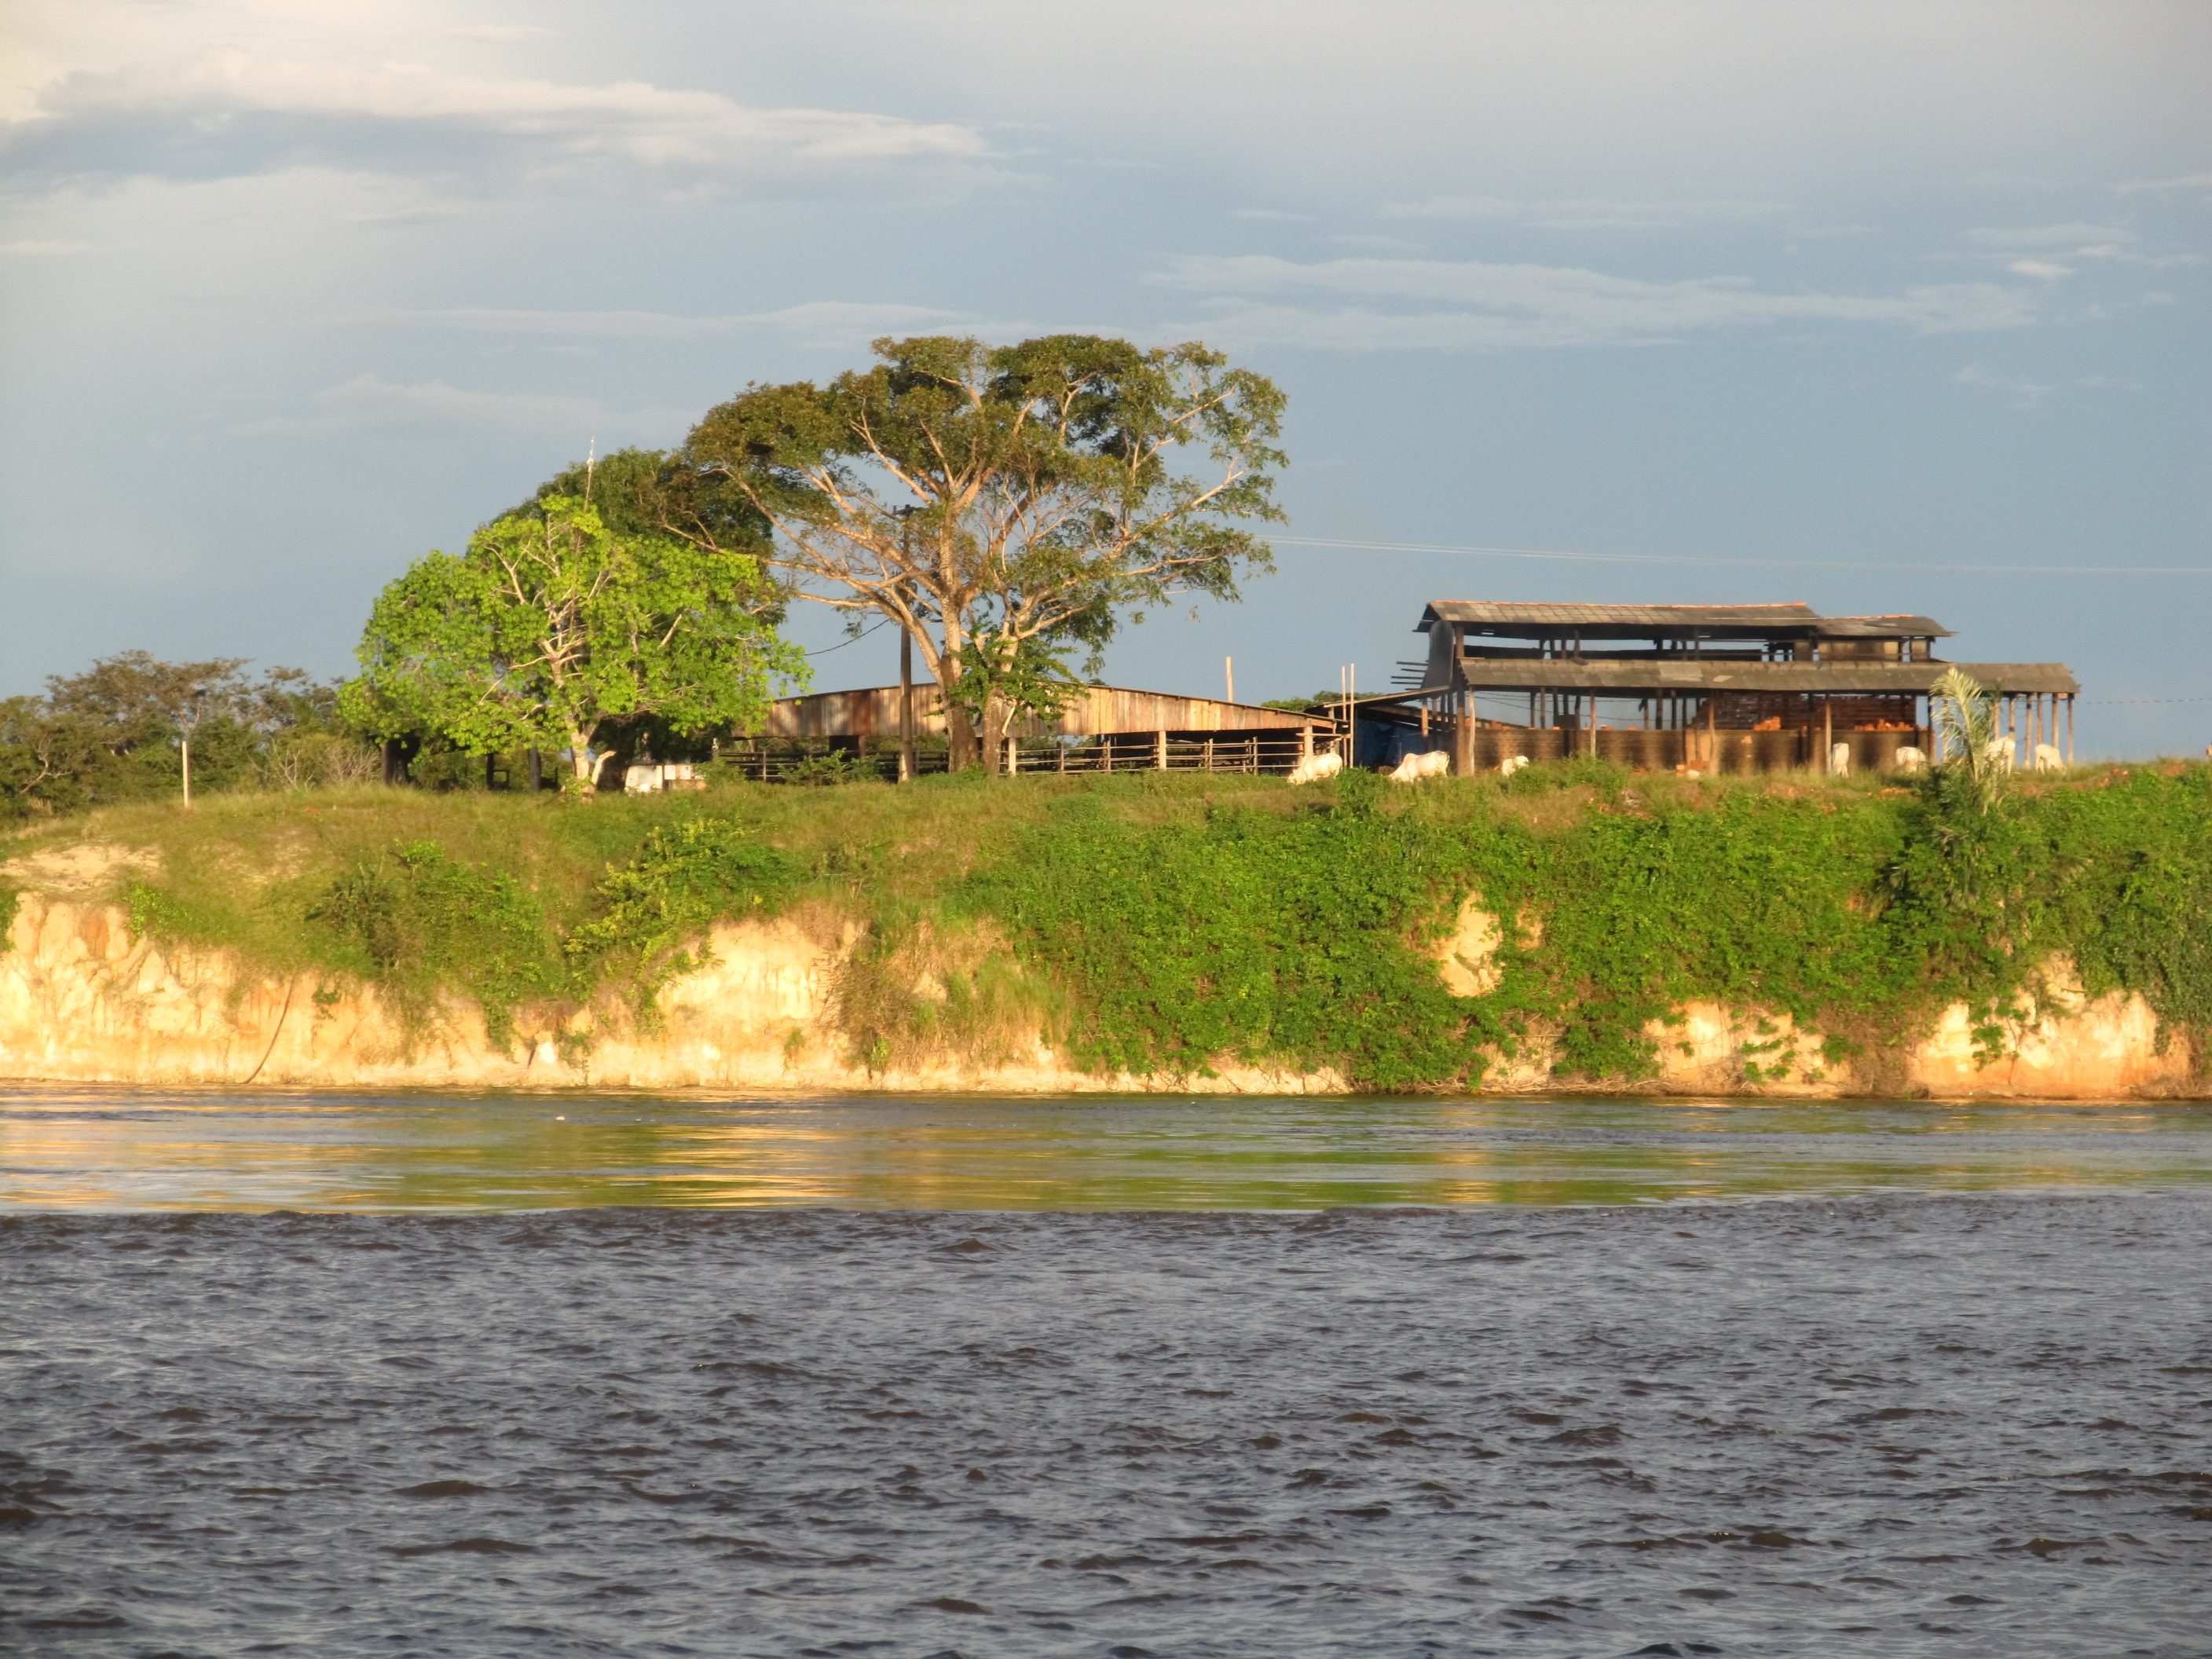 Gado às margens do Rio Amazonas nos arredores de Óbidos (PA). Foto de Daiane de Paula Ciriáco.